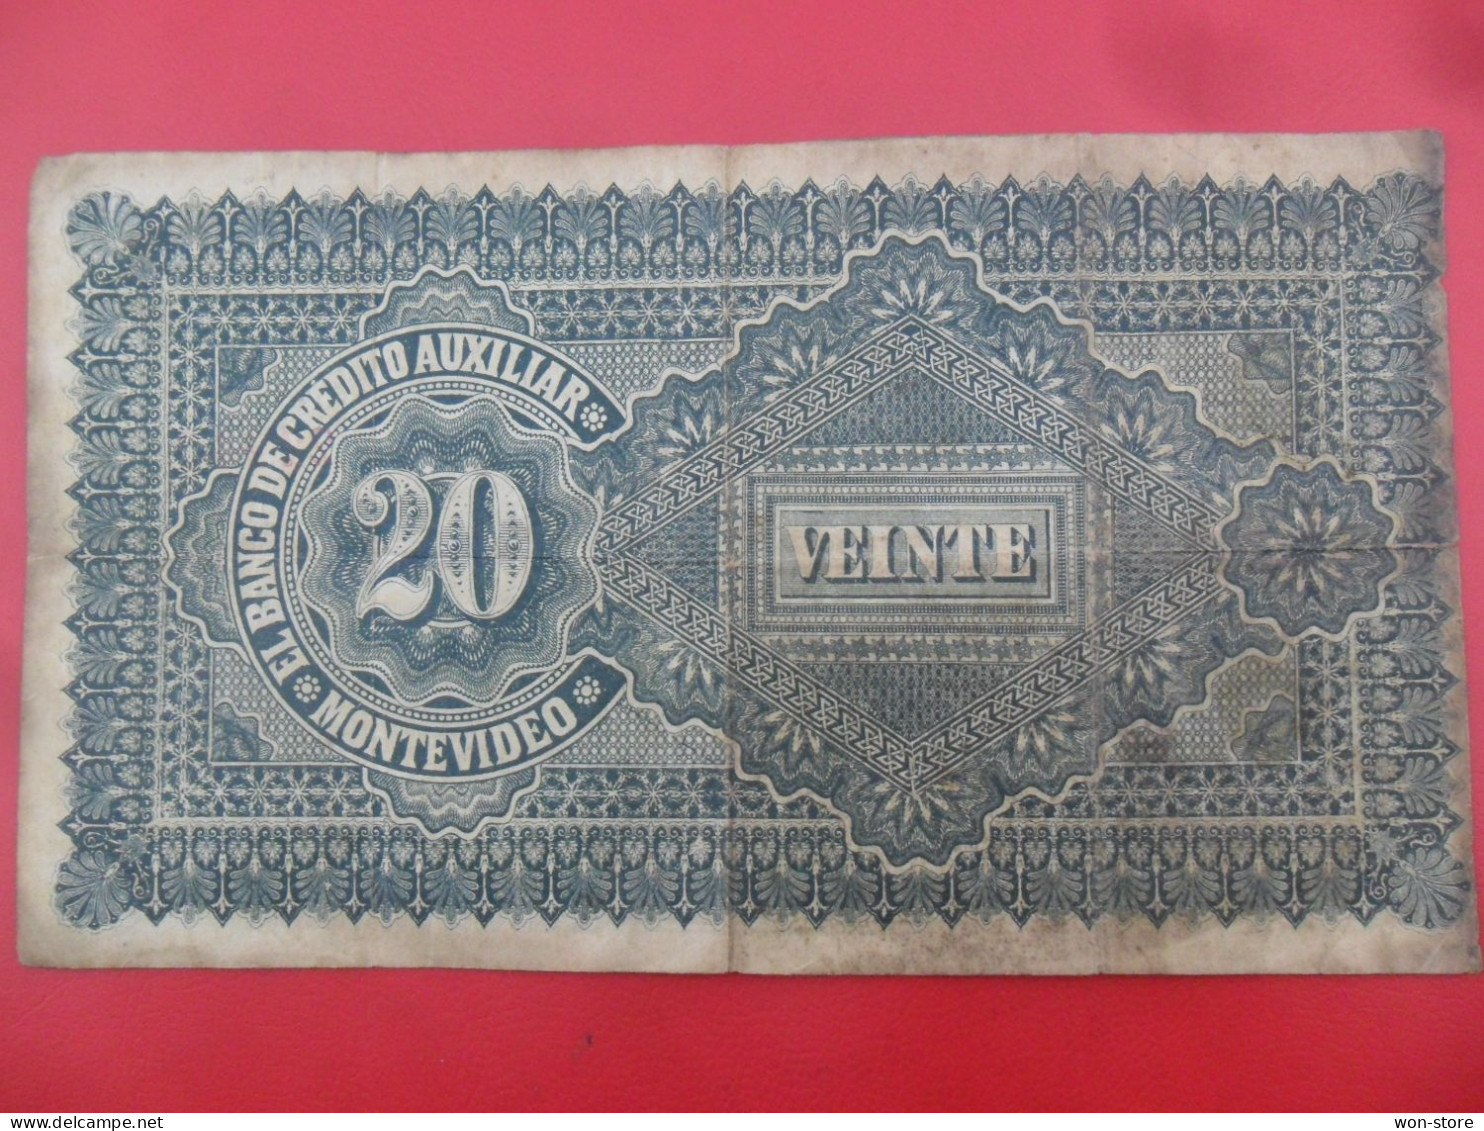 7665 - Uruguay 20 Pesos 1887 Replacement - S-164r - Uruguay